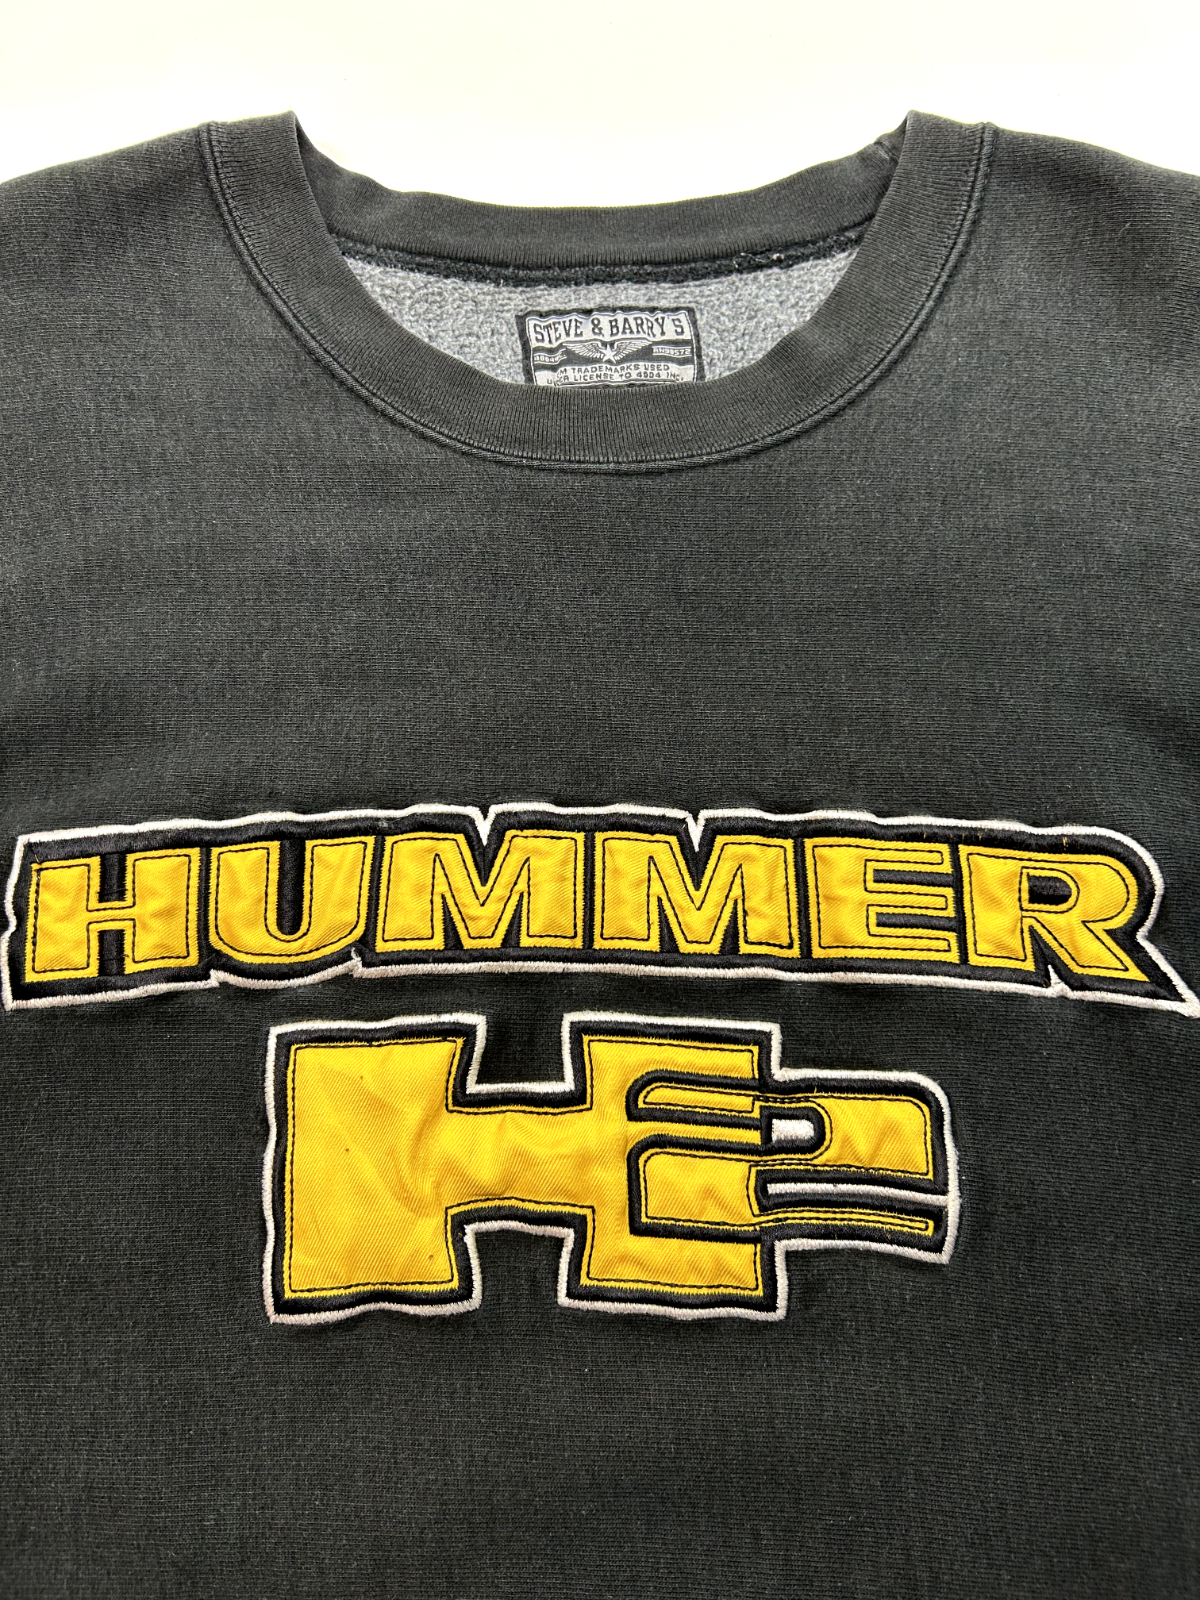 Vintage Hummer H2 Embroidered Patch Spellout Crewneck Sweatshirt Size 2XL Black